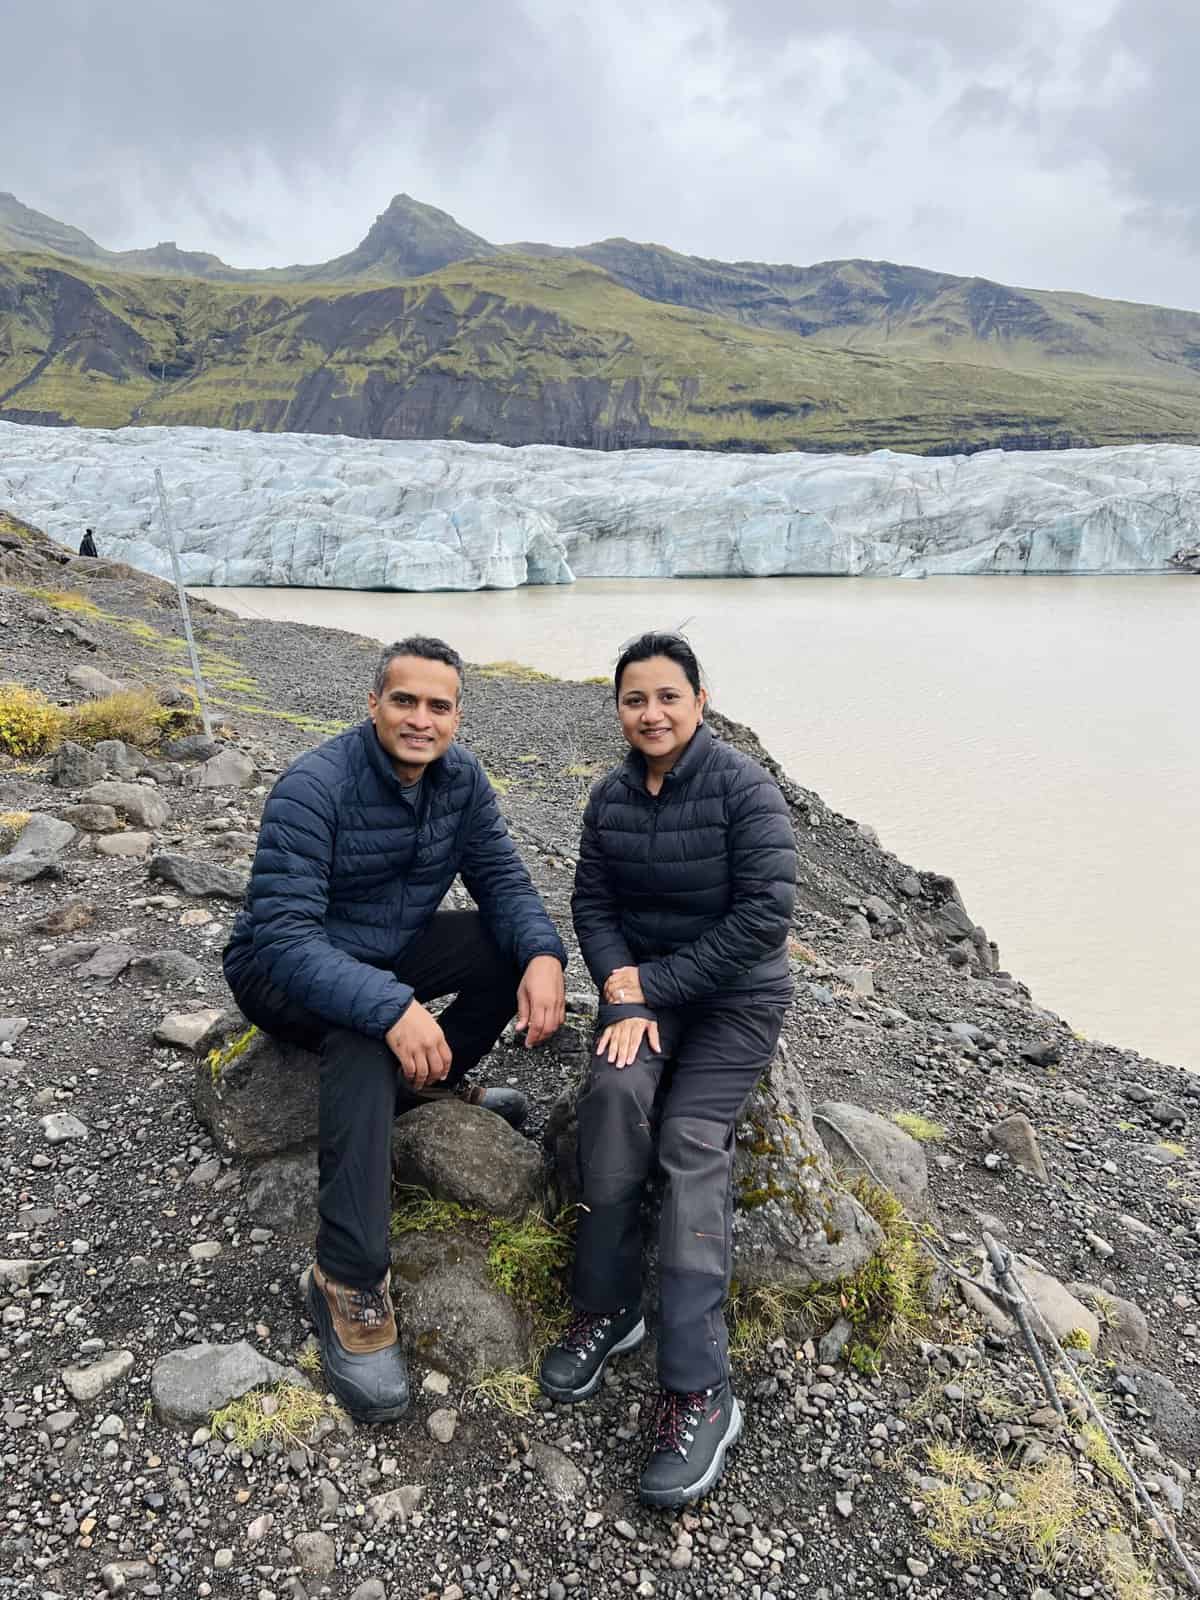 Photo in front of  Svinafellsjokull glacier 